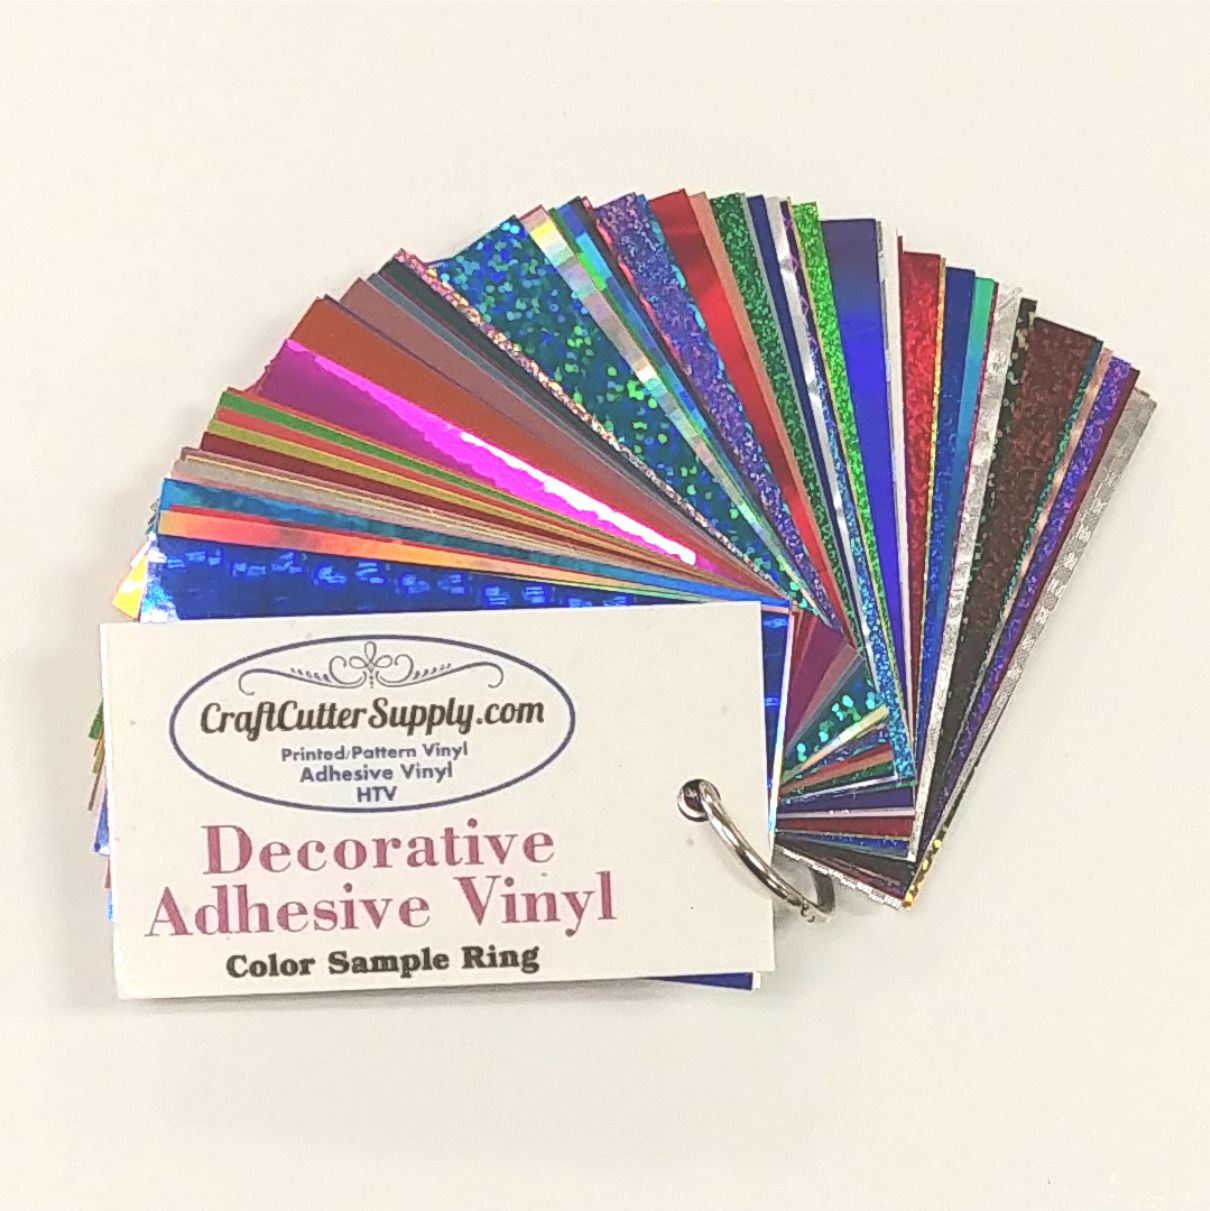 Decorative Adhesive Vinyl Sample Ring (Chrome, Rainbow, Holographic, etc)